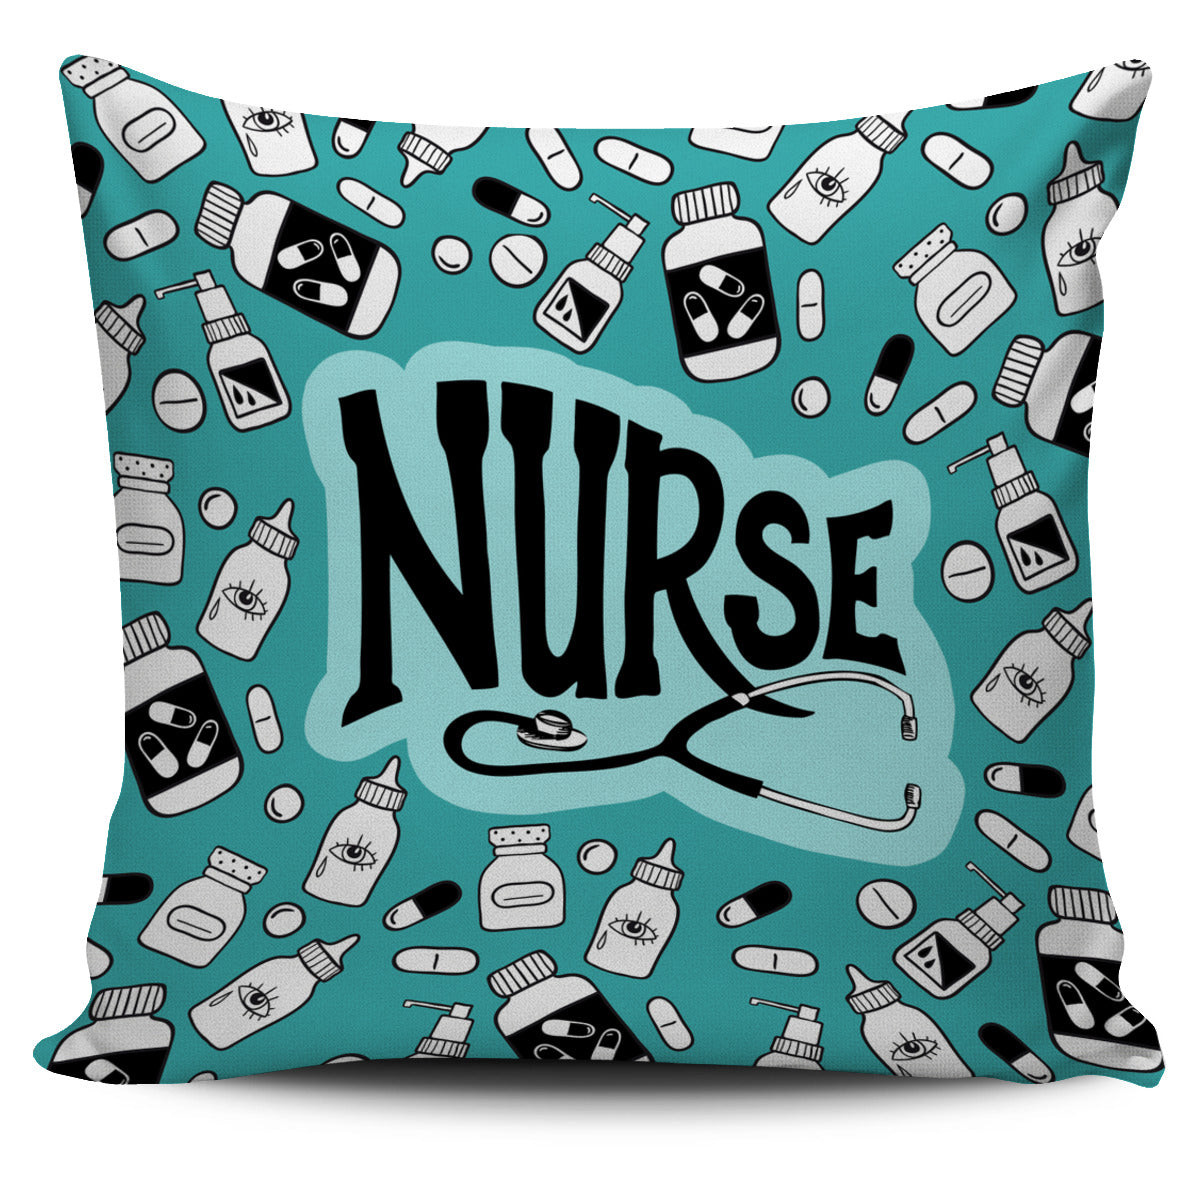 Nurse Care Pillow Cover